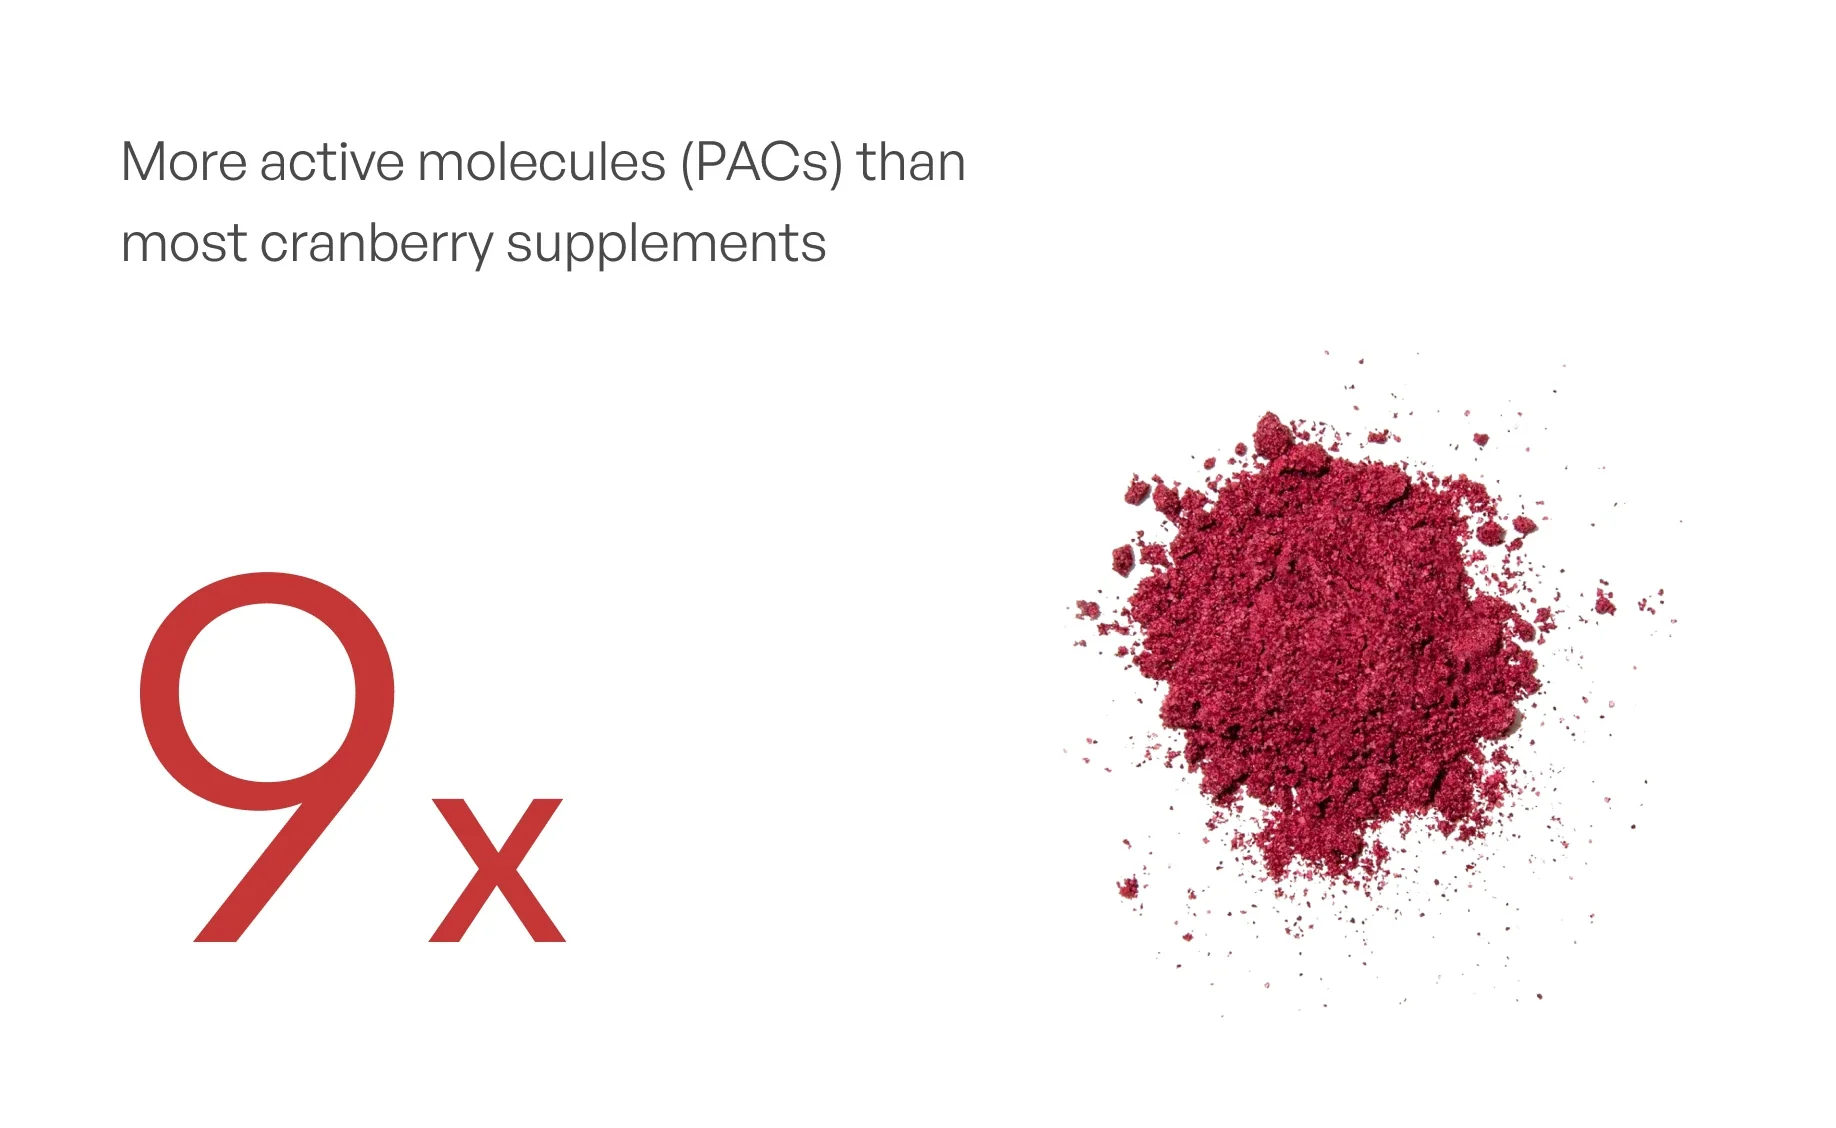 More active molecules (PACs) than most cranberry supplements